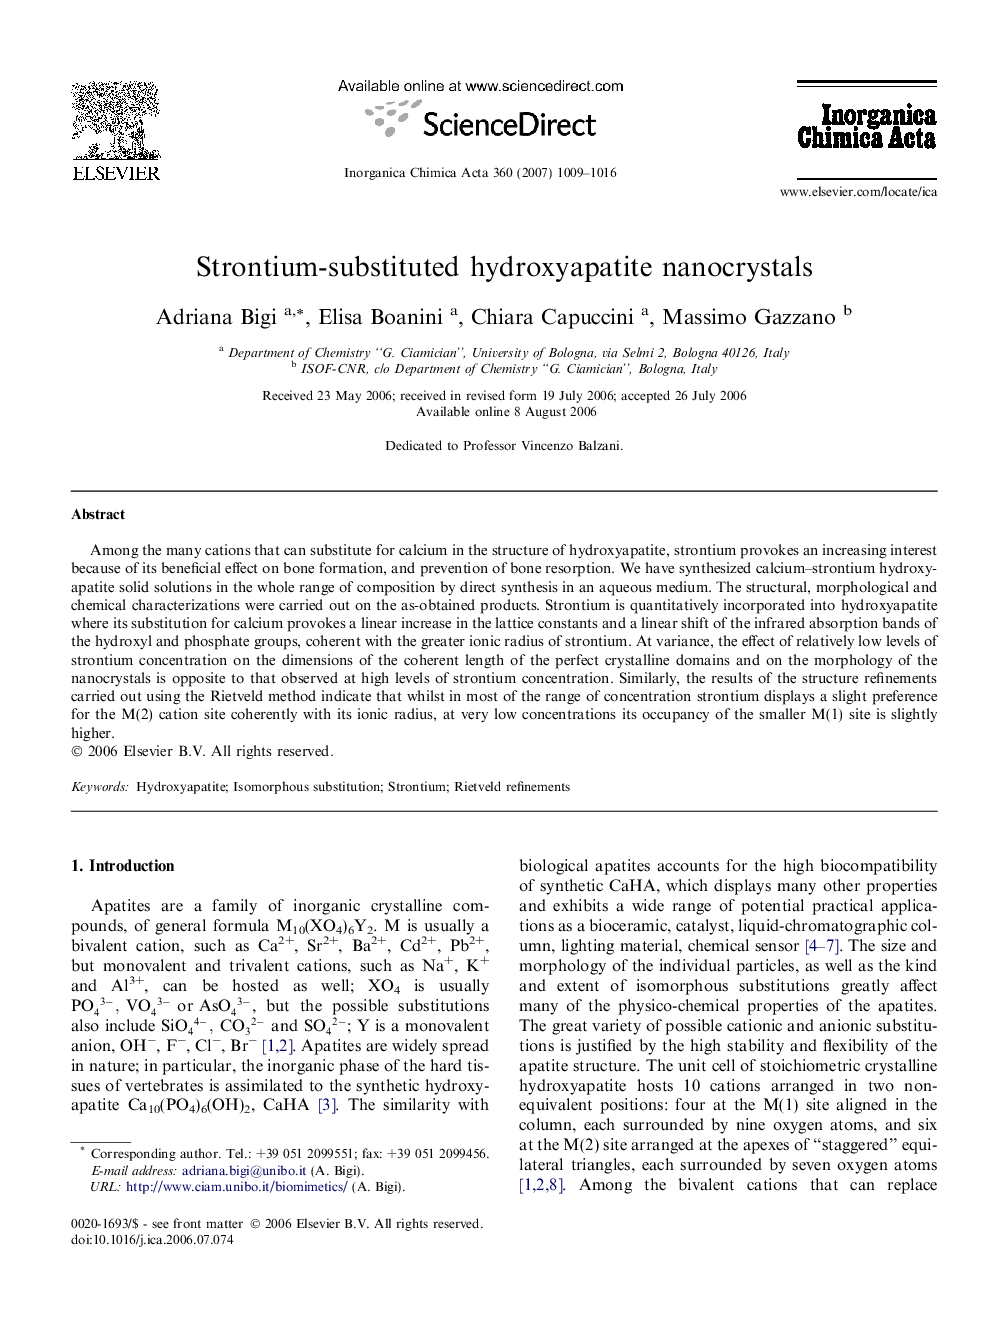 Strontium-substituted hydroxyapatite nanocrystals